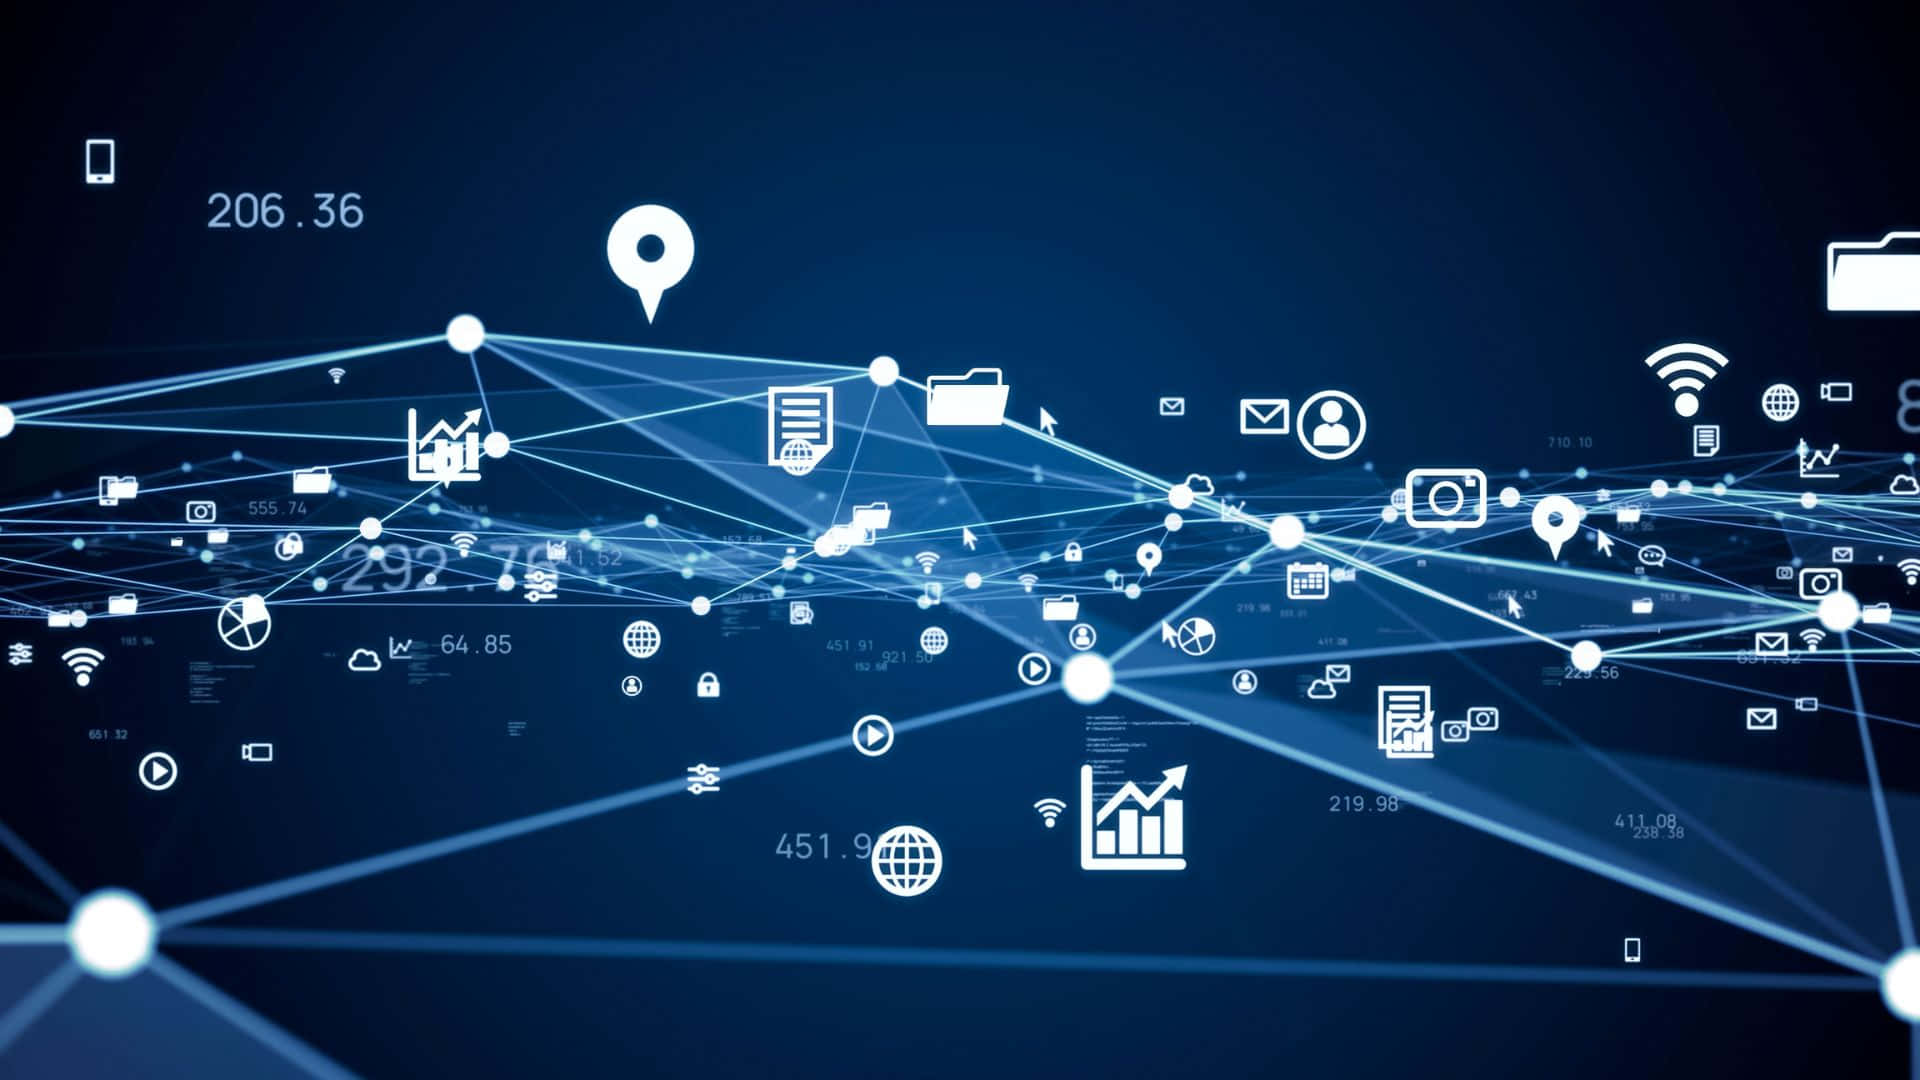 Digital Network Connectivity Concept Wallpaper